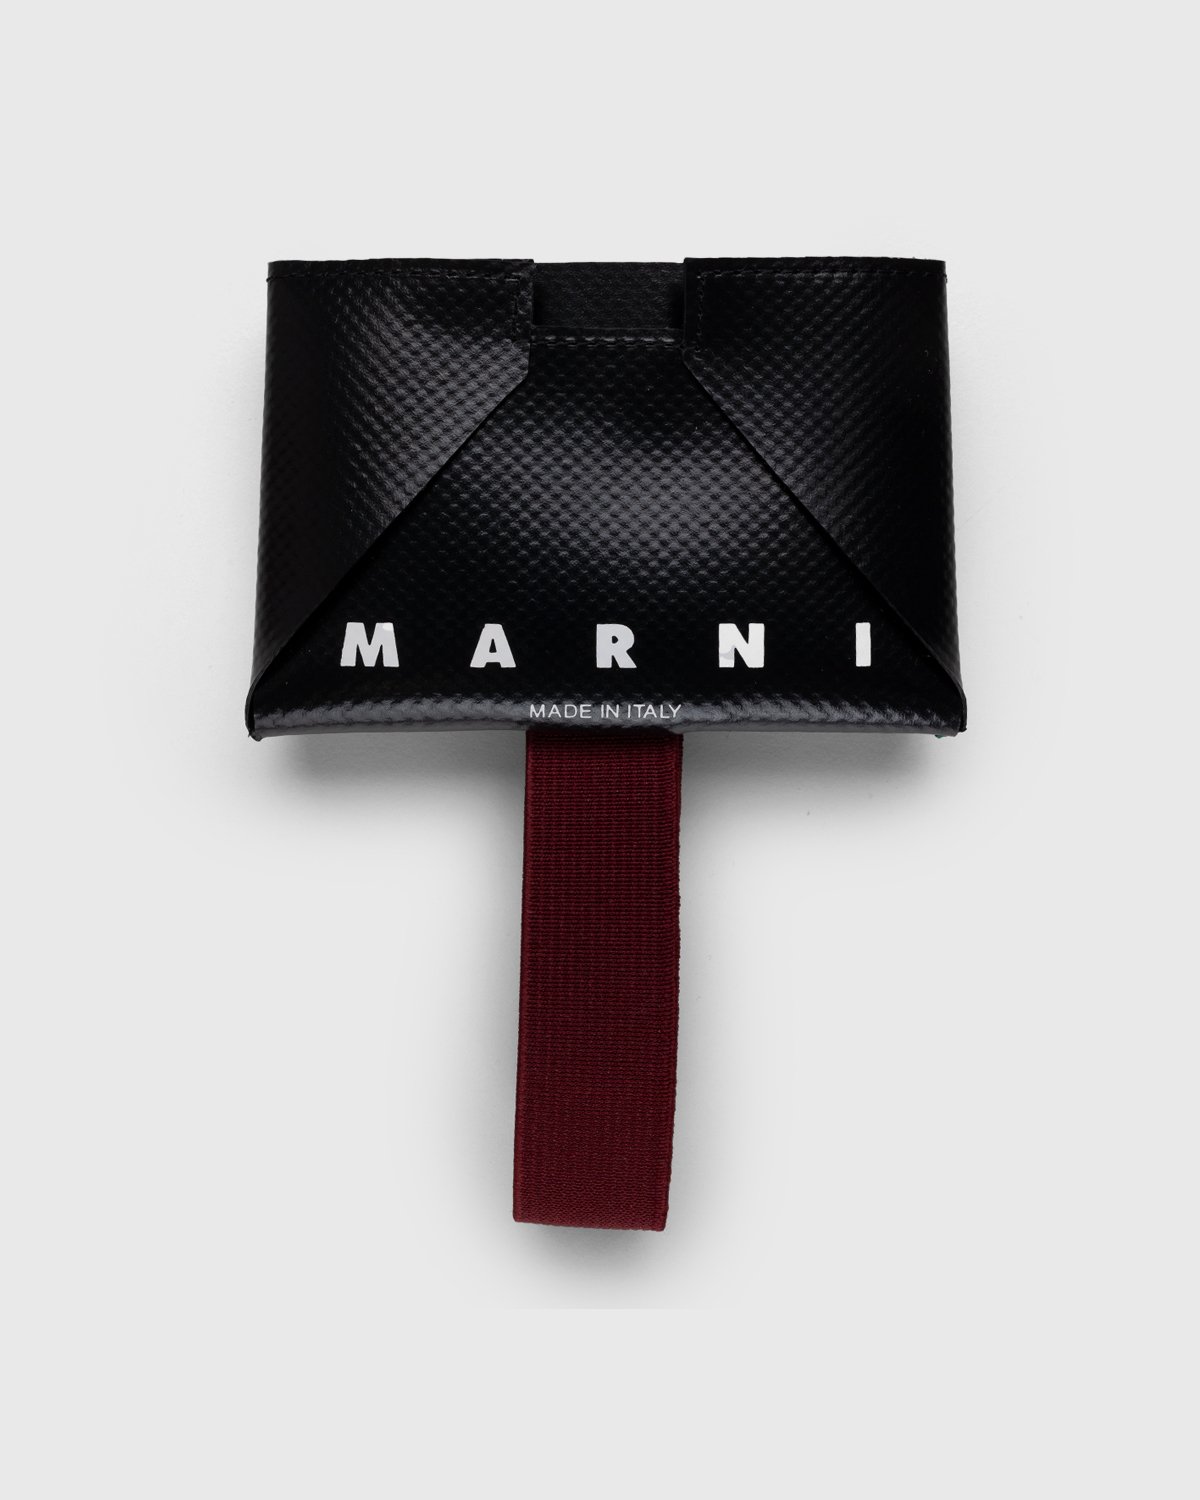 Marni - Origami Card Holder Black/Green - Accessories - Black - Image 3